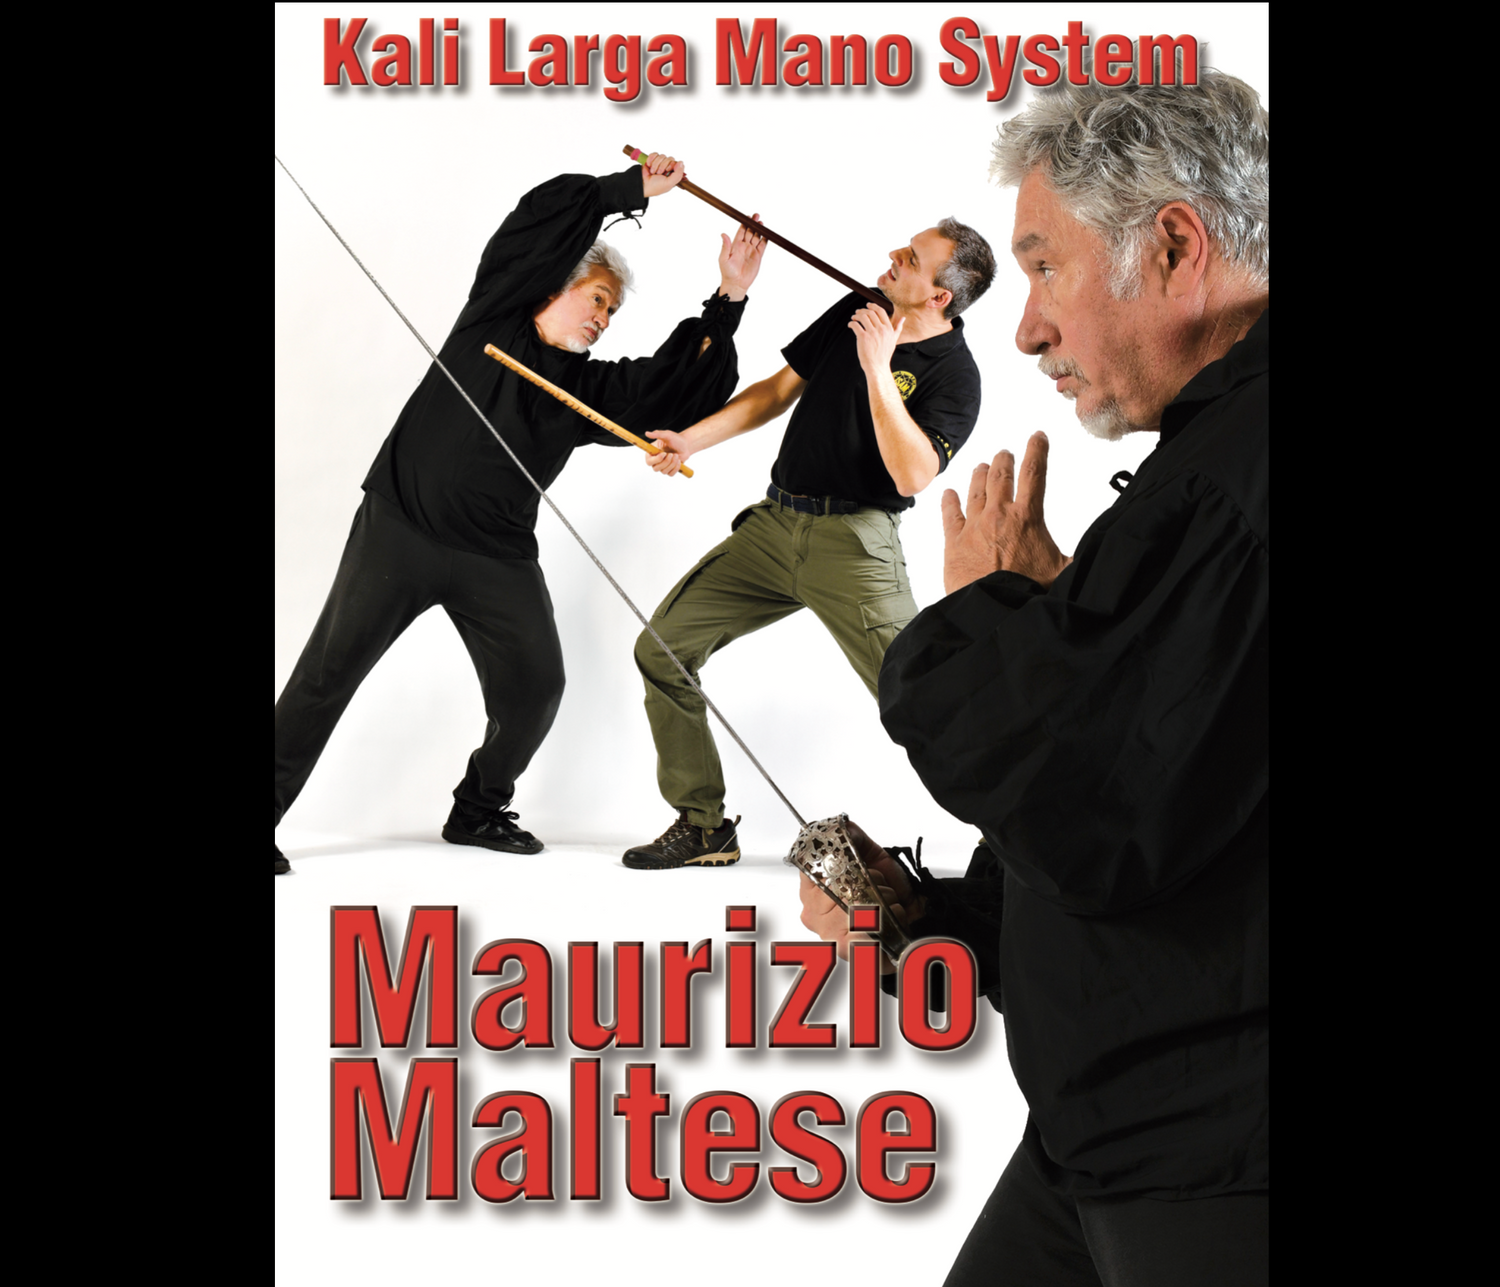 Kali Larga Mano System by Maruicio Maltese (On Demand)